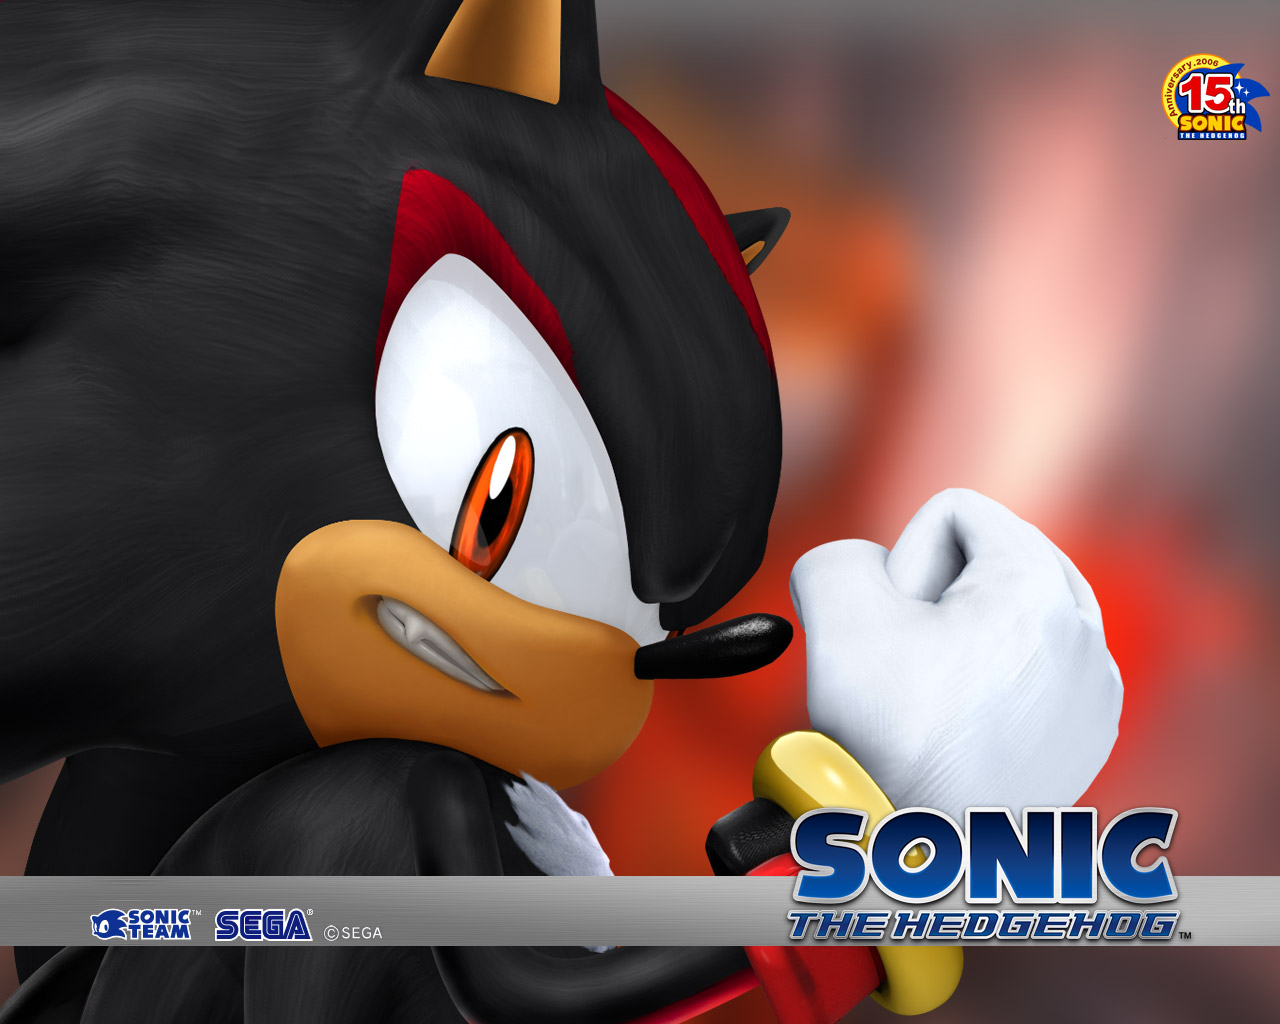 Sonic Mania - #shadow - kkkkkkkk melhor filme desse ano kkkkkkk